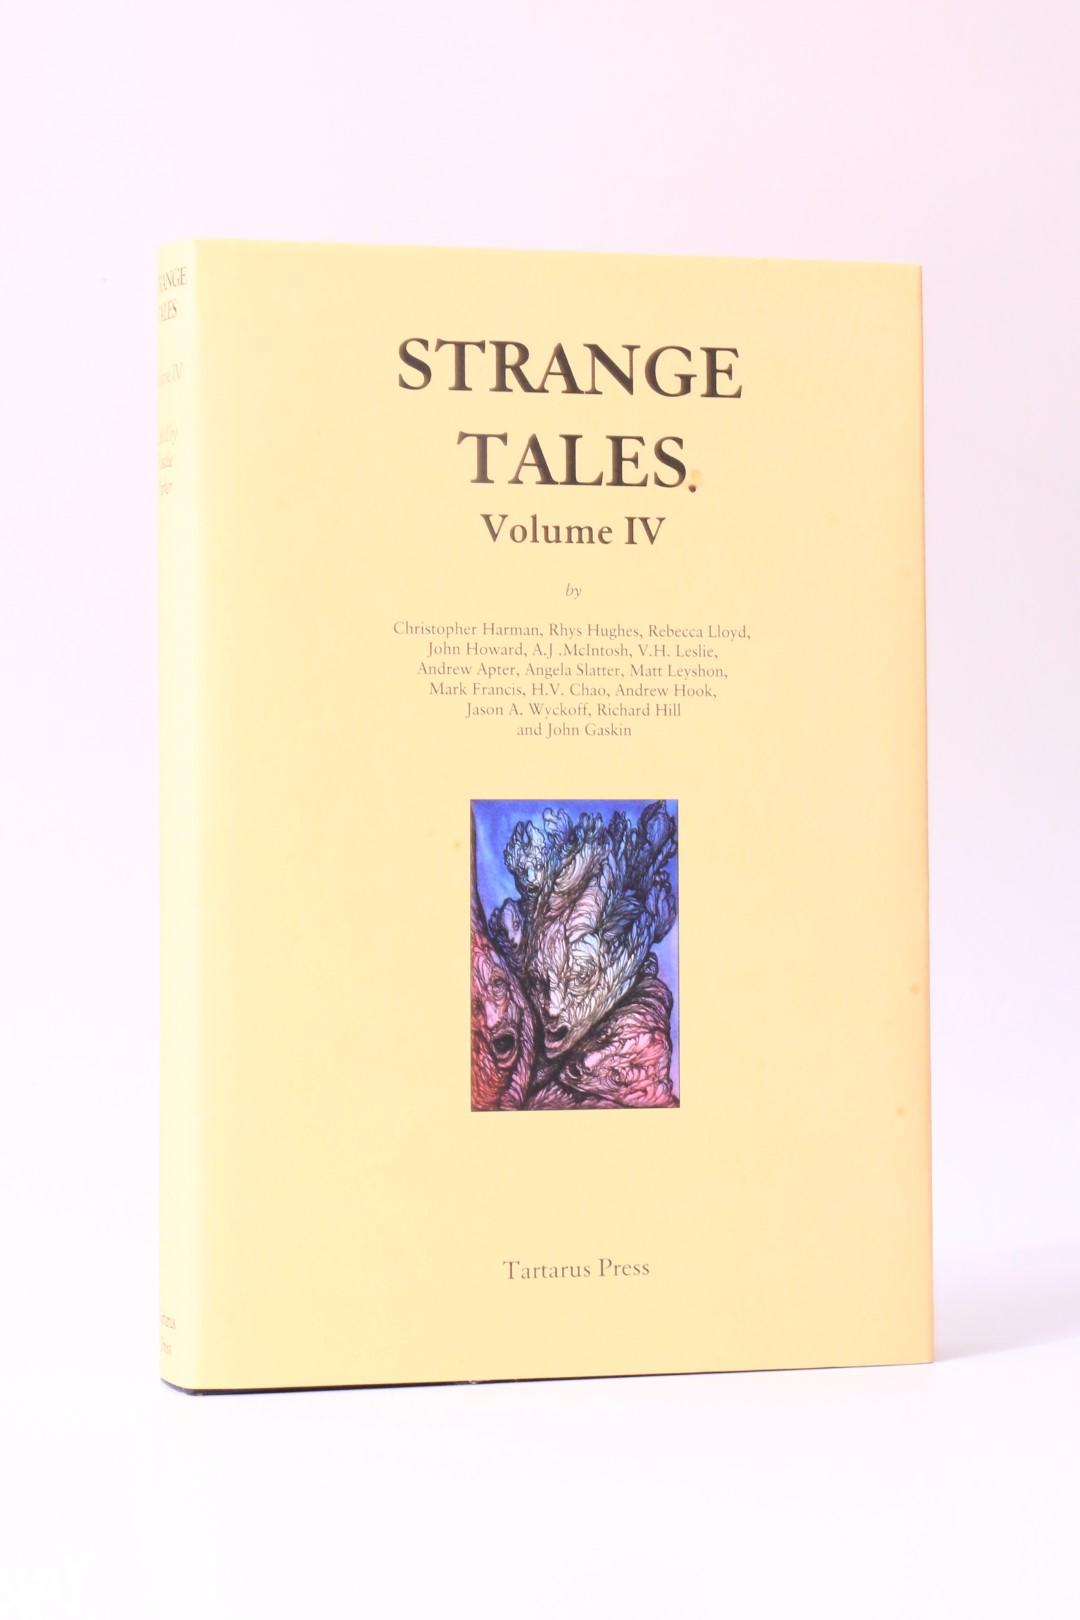 Rosalie Parker [ed.] - Strange Tales Volume IV - Tartarus Press, 2014, Limited Edition.